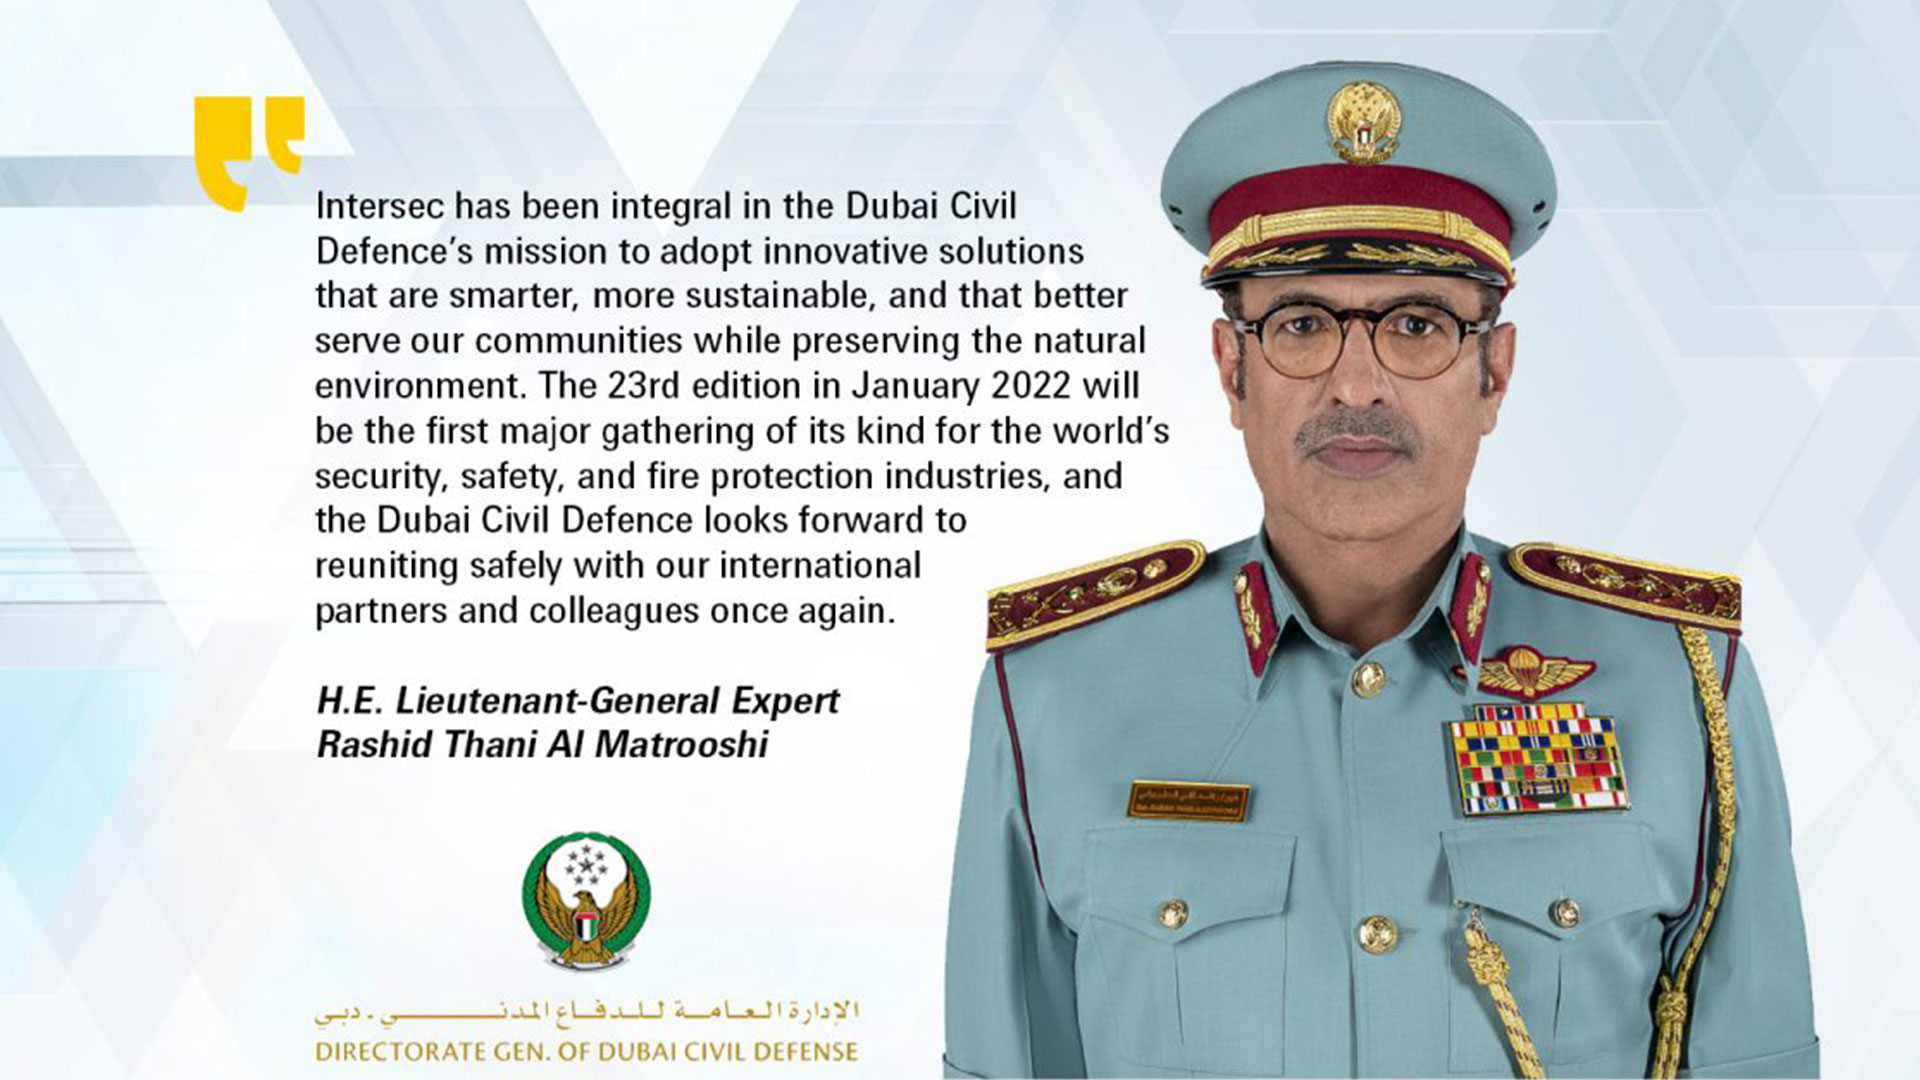 H.E. Lieutenant-General Expert Rashid Thani Al Matrooshi of the General Directorate of Civil Defense - Dubai